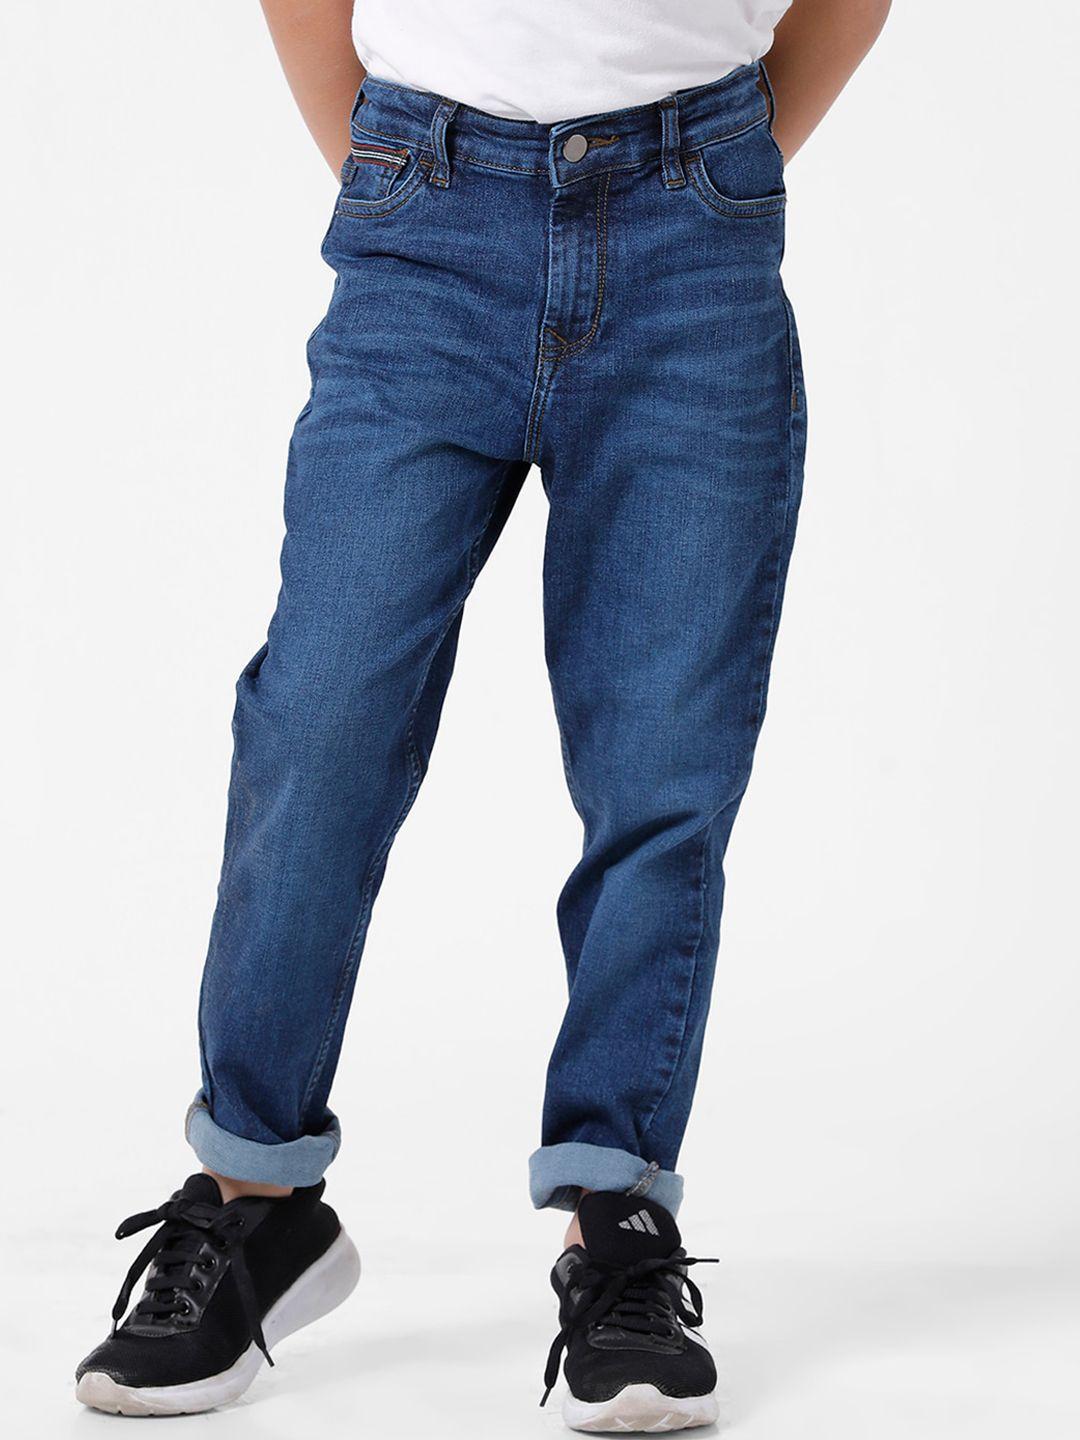 kate & oscar boys comfort fit low distress light fade casual cotton jeans